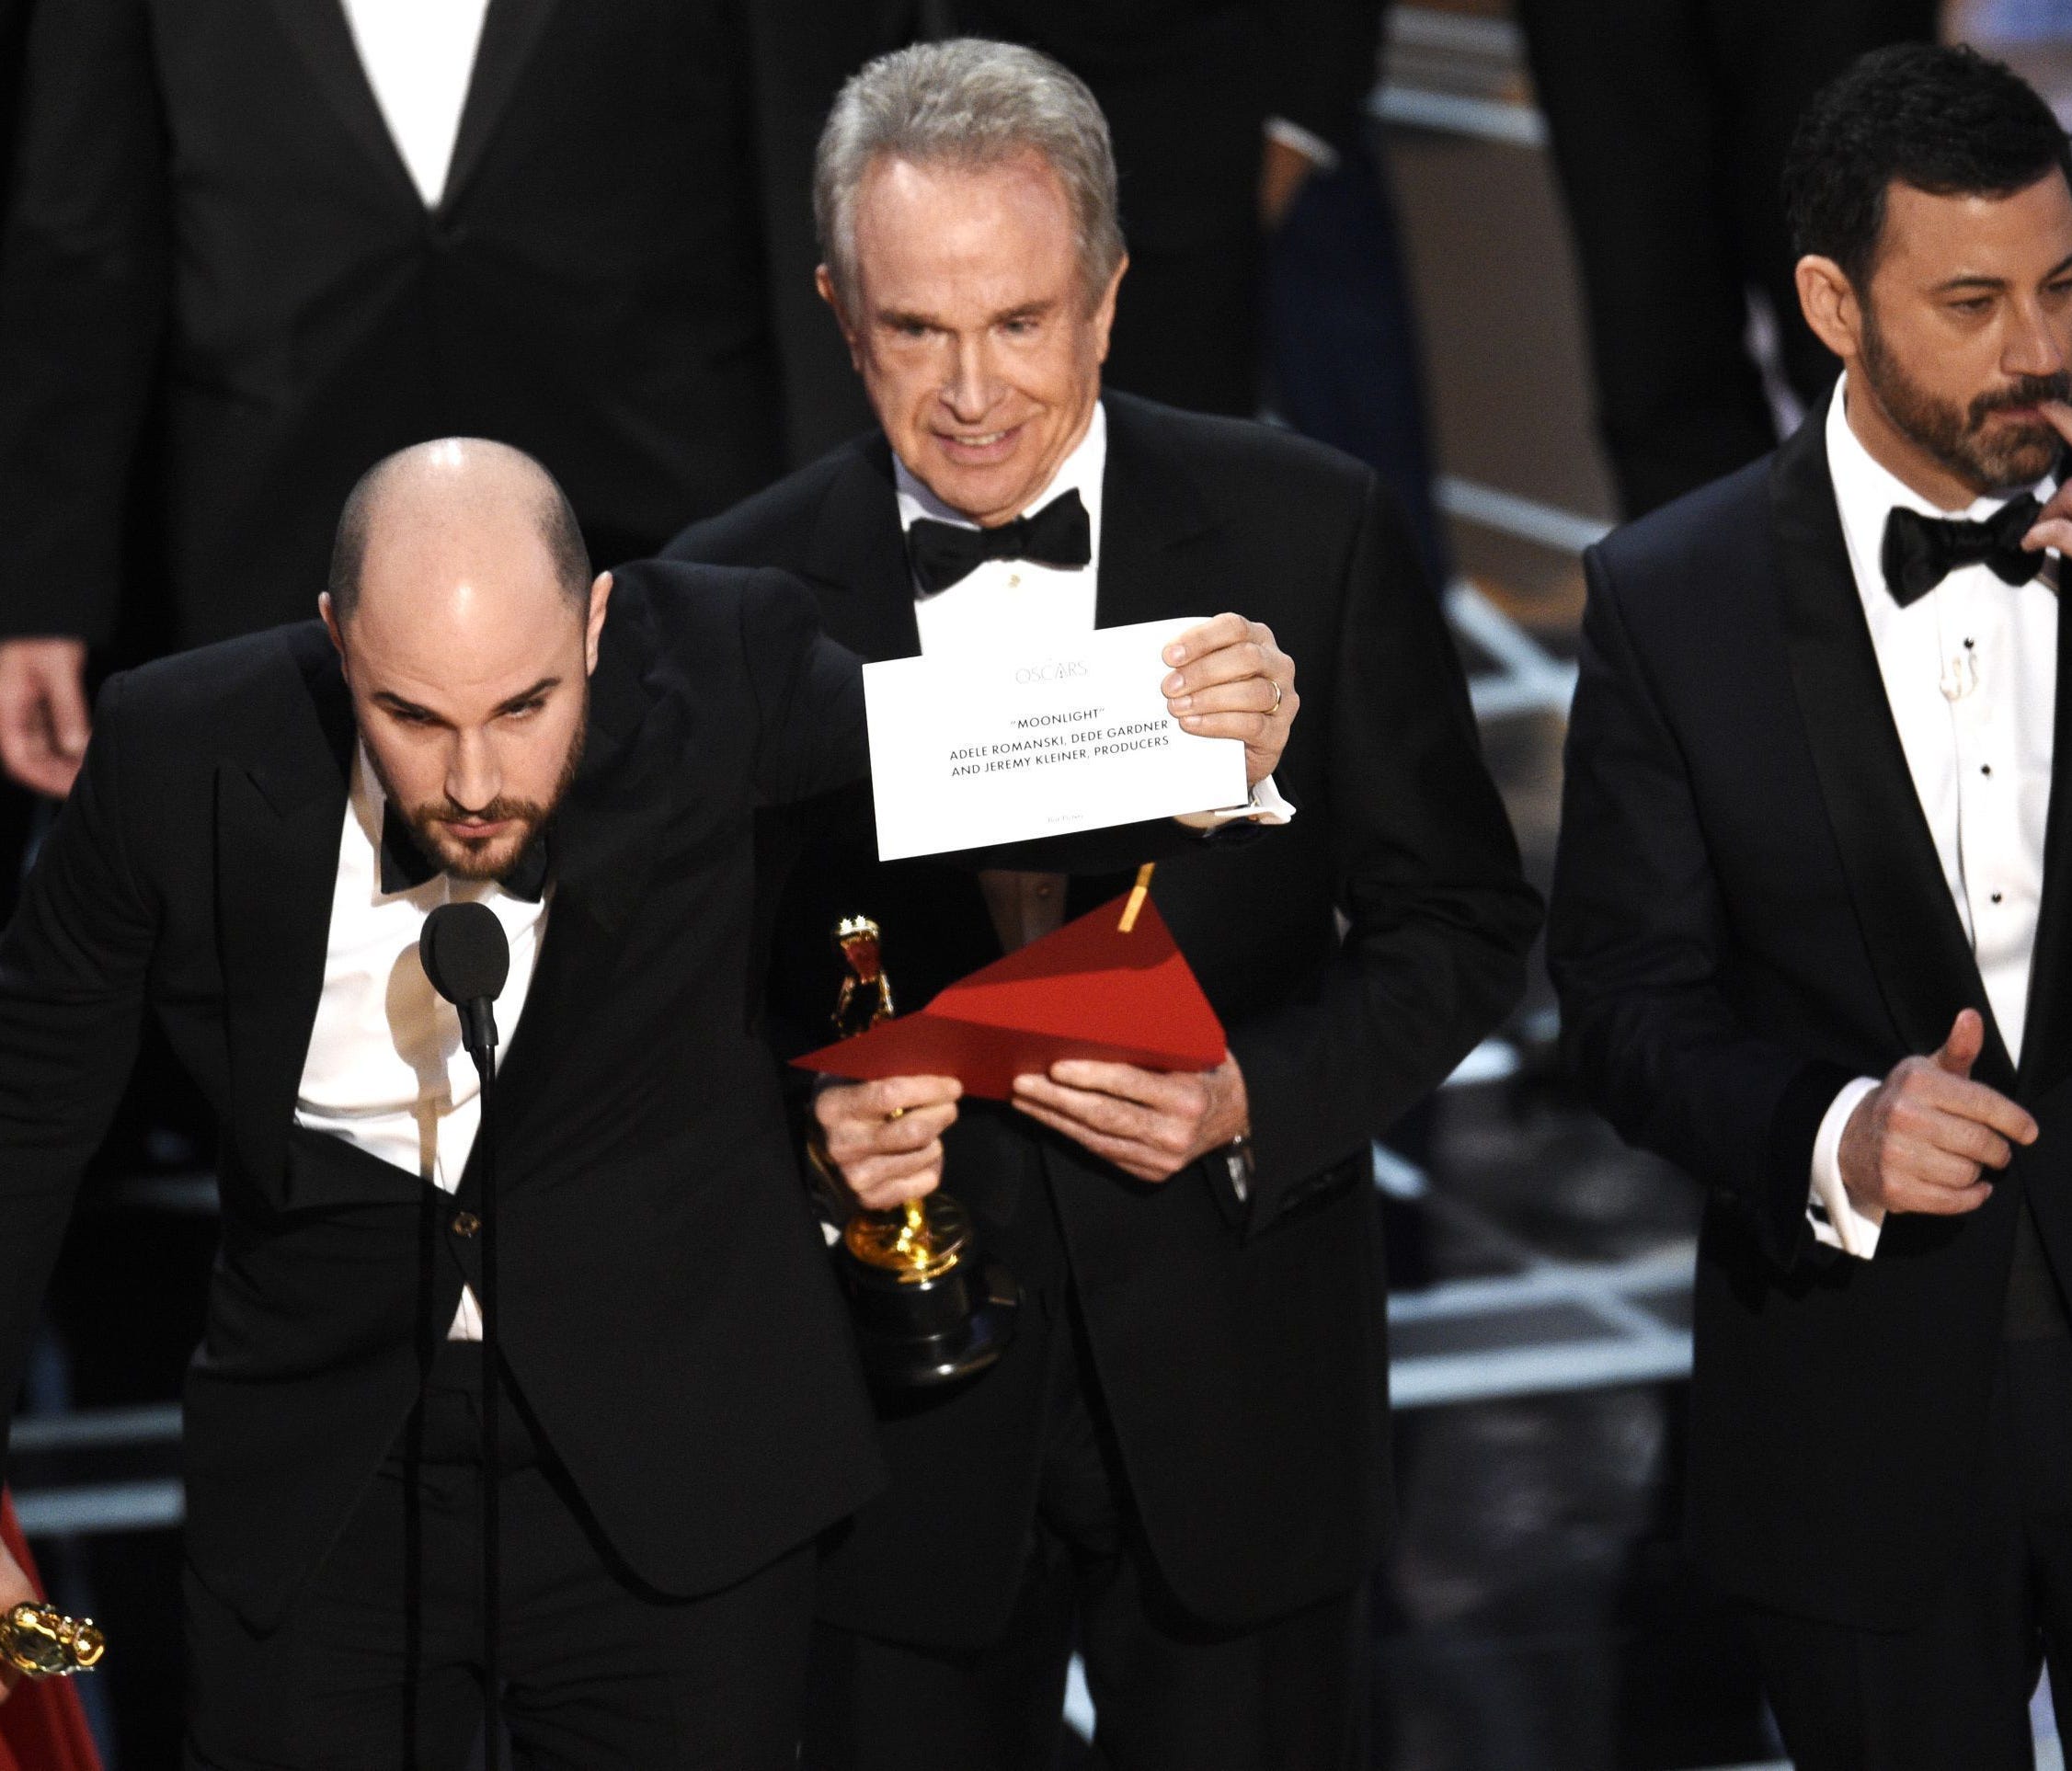 'La La Land' producer Jordan Horowitz shows the envelope revealing 